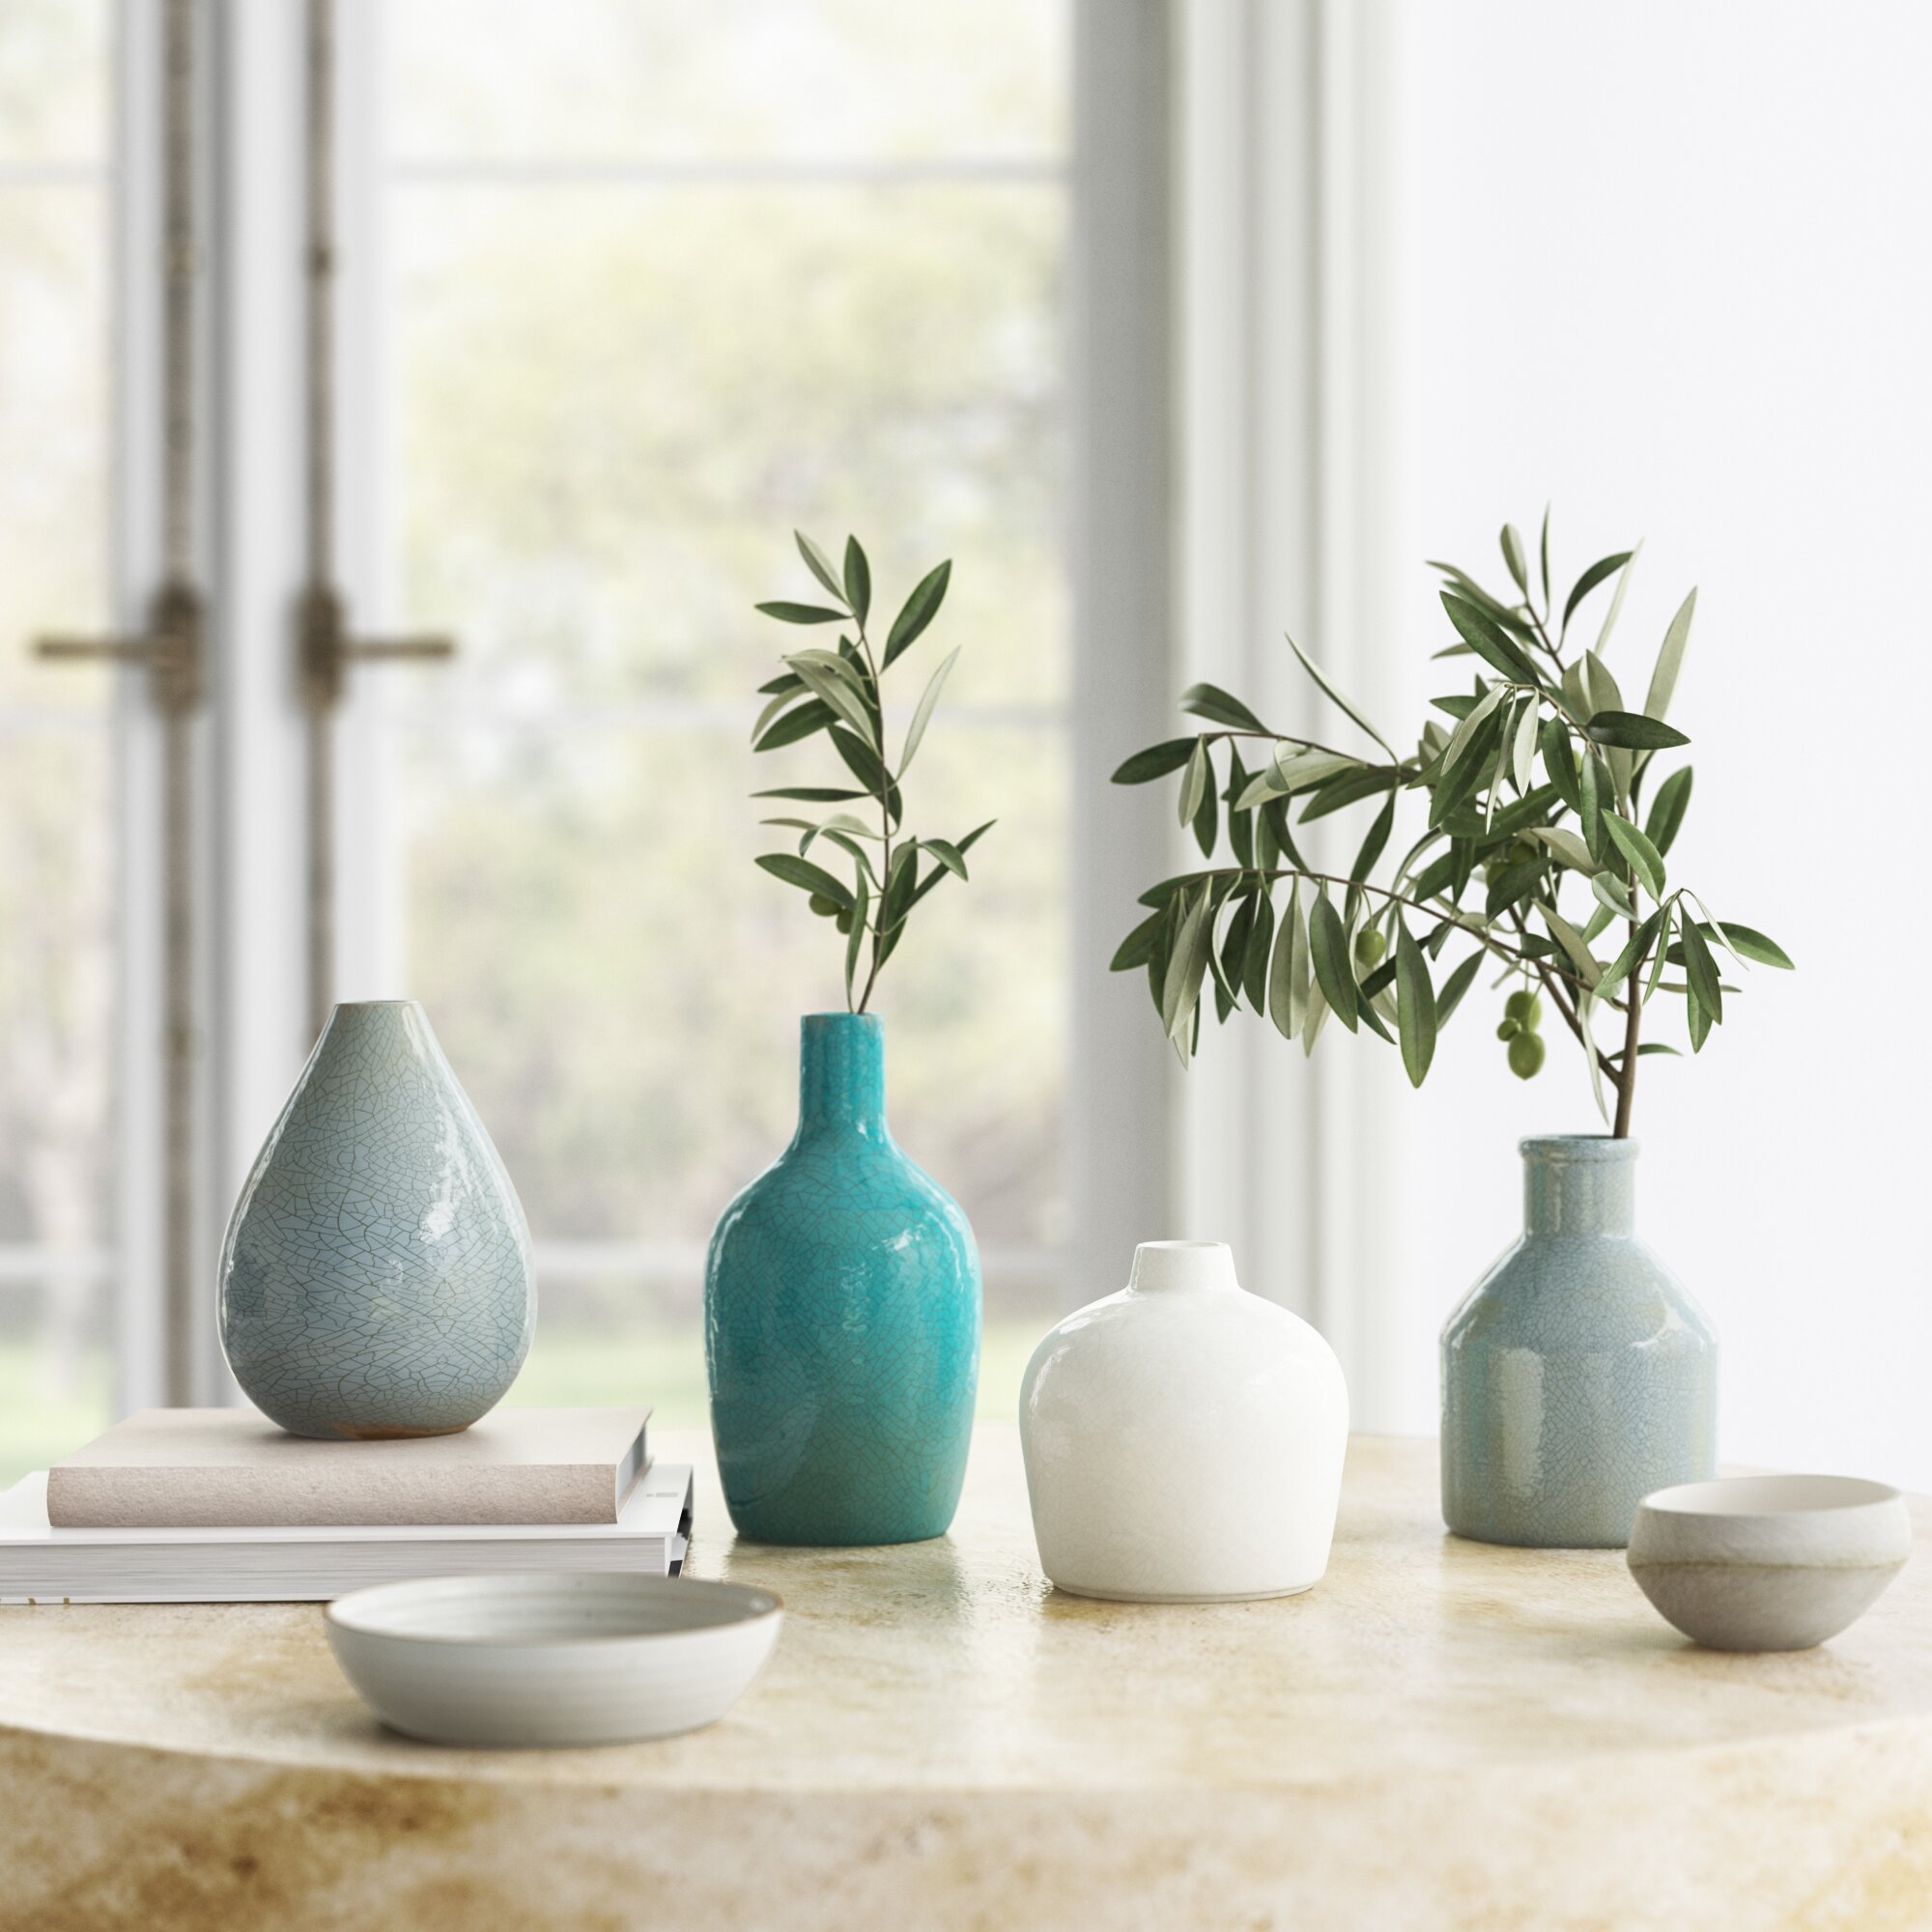 Weon 4 Piece Ceramic Table Vase Set